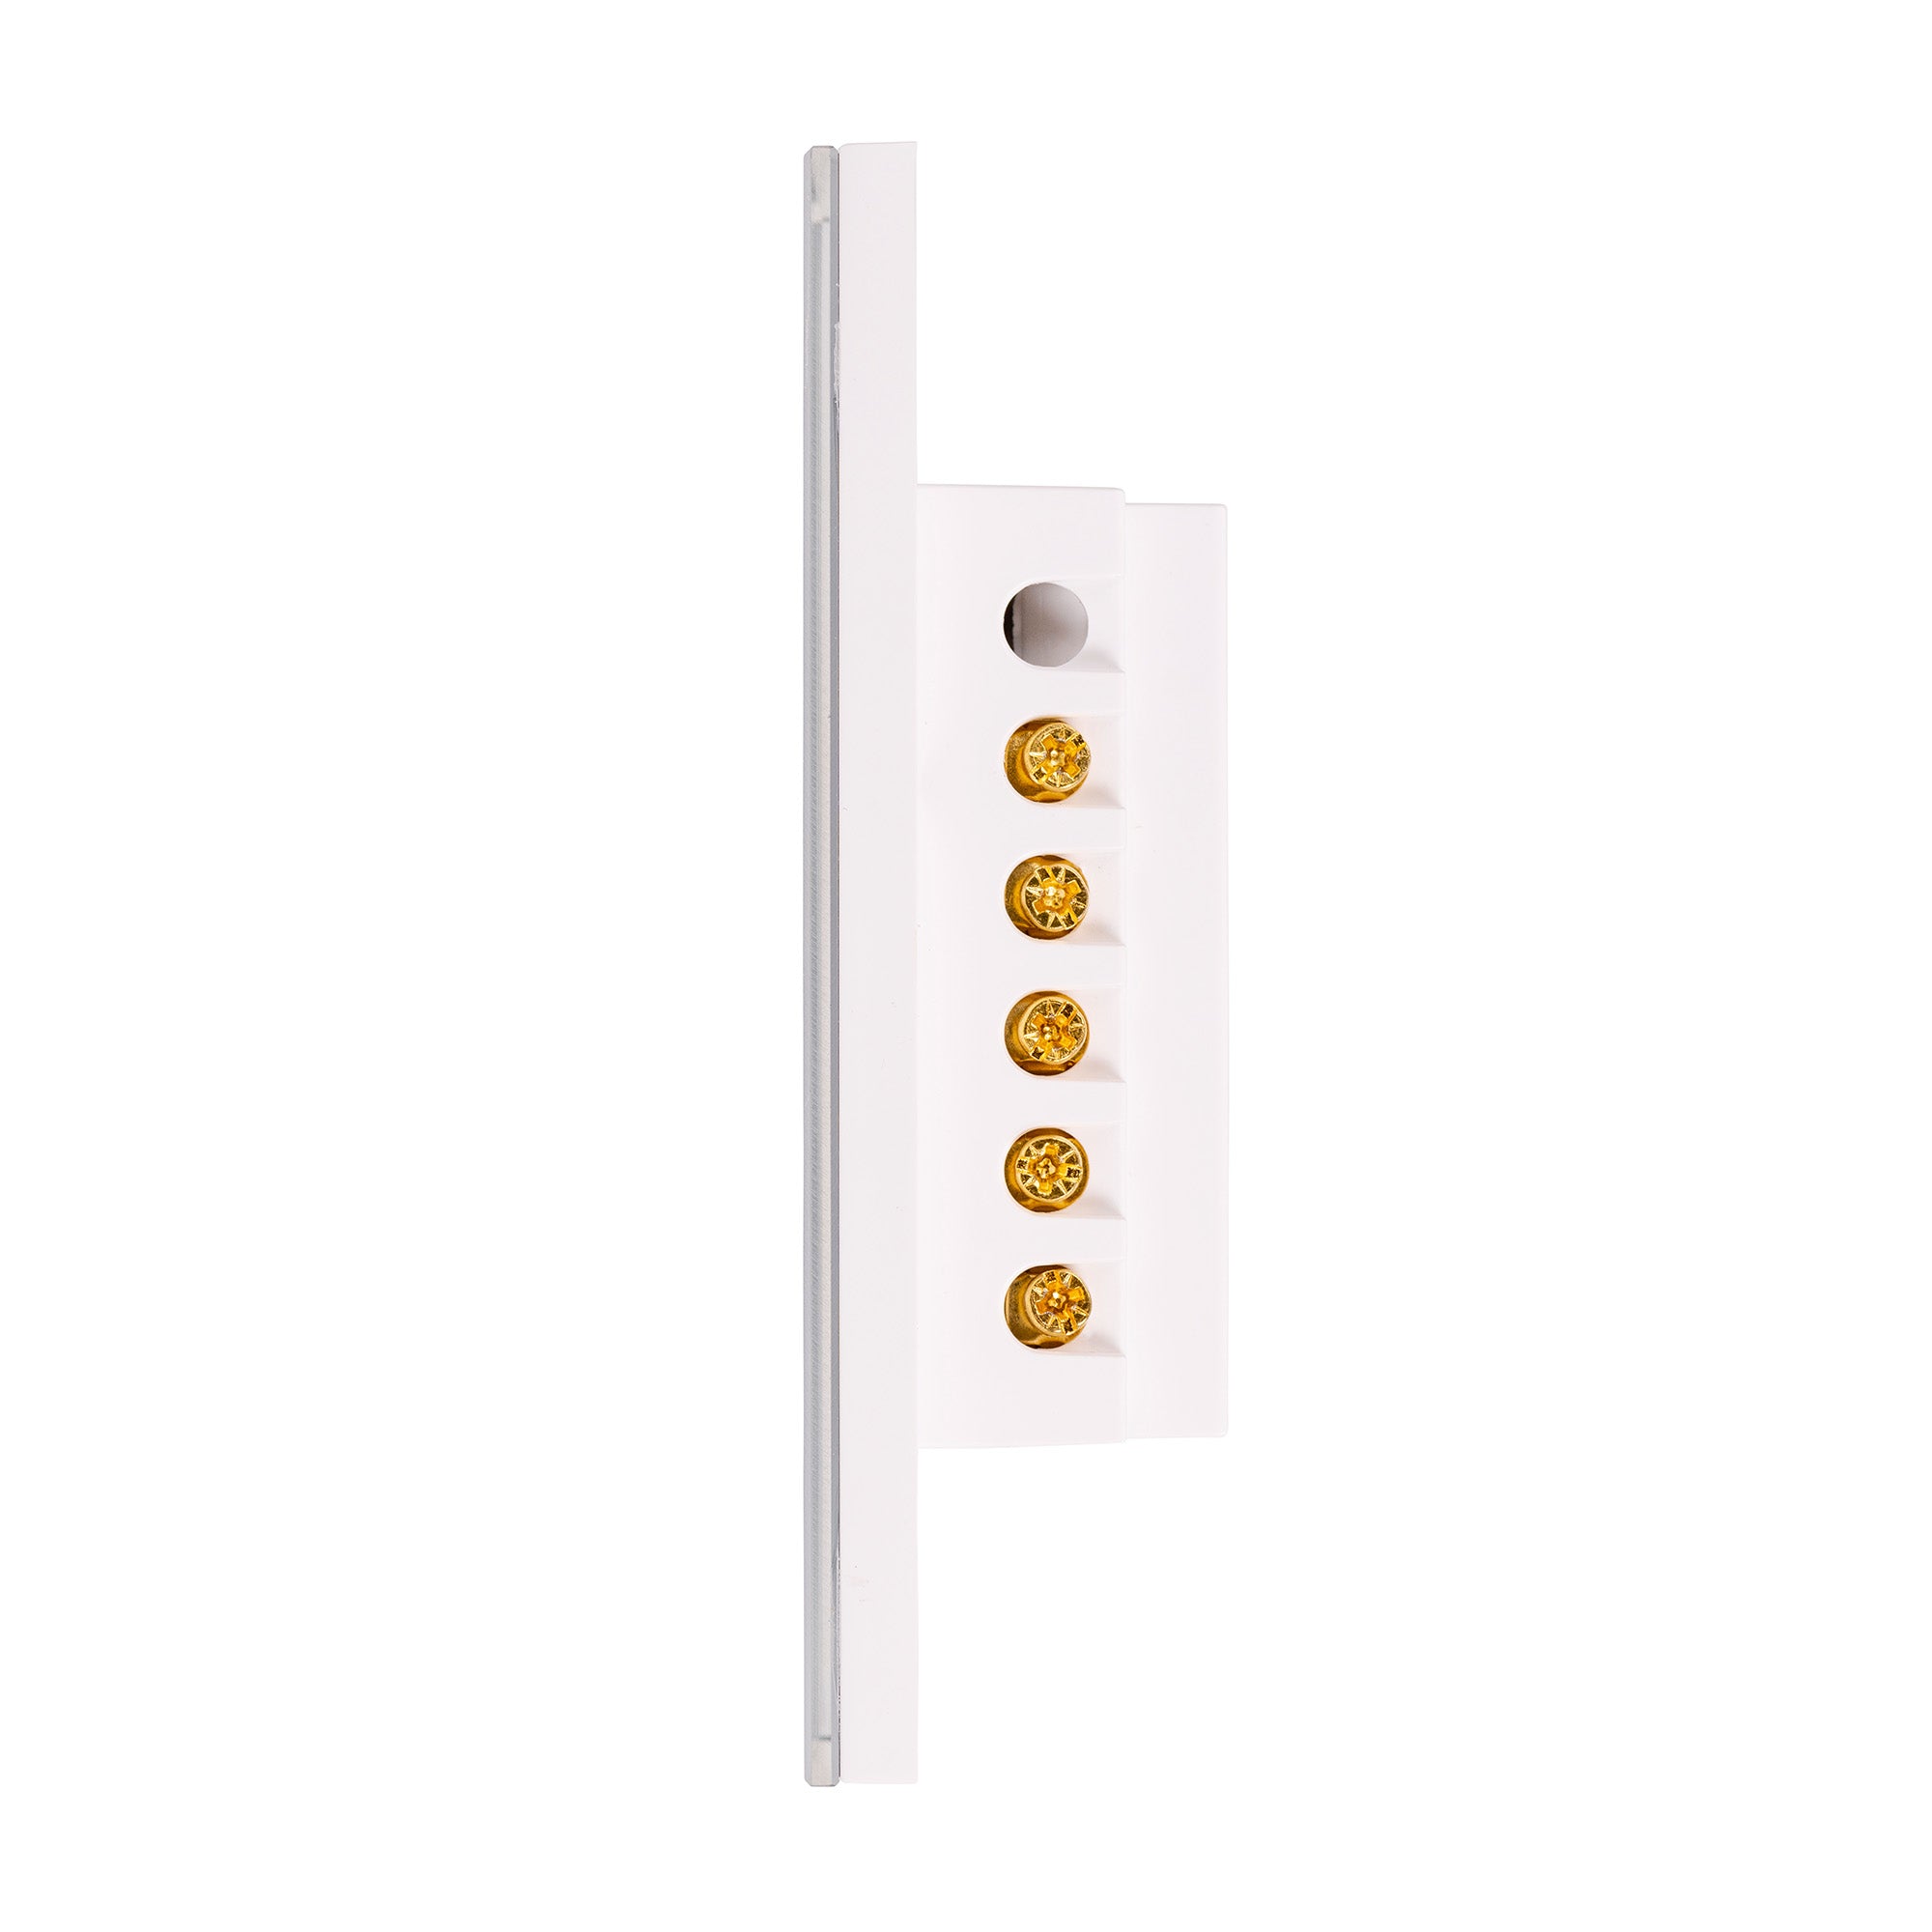 HV9110-3 - Wifi Three Gang White Wall Switch